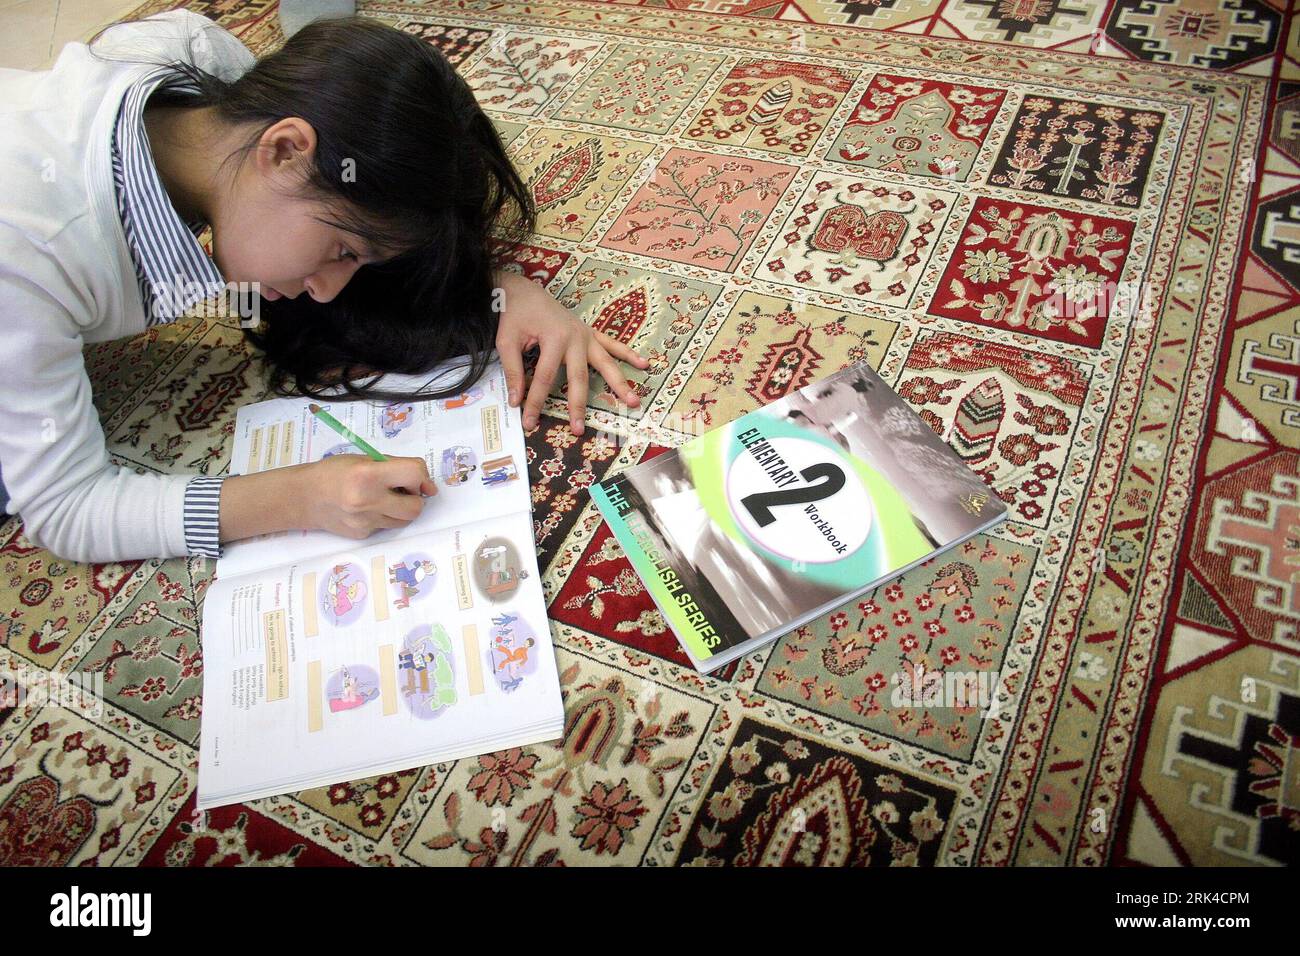 Bildnummer: 53612761  Datum: 19.11.2009  Copyright: imago/Xinhua (091120) -- TEHERAN, Nov. 20, 2009 (Xinhua) -- Rasa forouzan, a 12-year-old Iranian girl, does her homework on a traditional Persian carpet, in Teheran, capital of Iran, Nov. 19, 2009. (Xinhua/Ahmad Halabisaz) (lyi) (UNIVERSAL CHILDREN S DAY)(5)IRAN-TEHERAN-GIRL-DAILY LIFE PUBLICATIONxNOTxINxCHN Gesellschaft Kind Kinder Fotostory Homestory kbdig xkg 2009 quer o0 Schule, Bildung, Hausaufgaben    Bildnummer 53612761 Date 19 11 2009 Copyright Imago XINHUA  Tehran Nov 20 2009 XINHUA Rasa  a 12 Year Old Iranian Girl does her homework Stock Photo